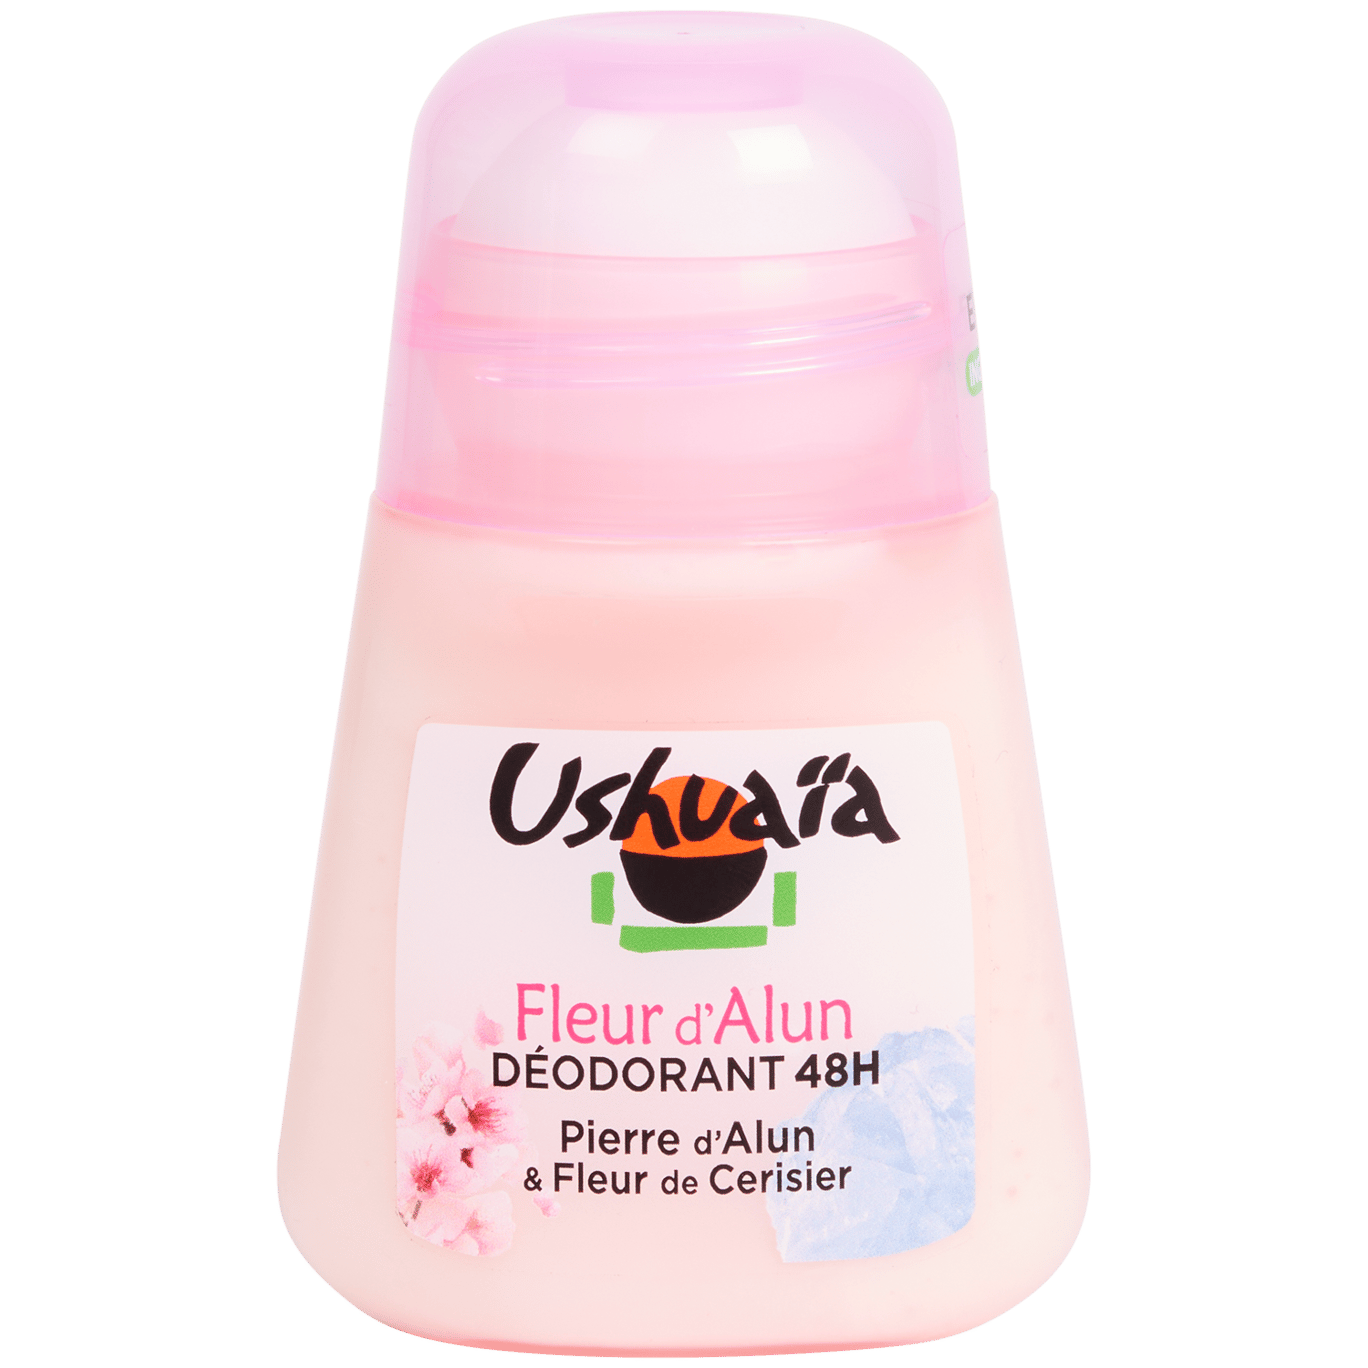 Ushuaïa déodorant Fleur d'Alun